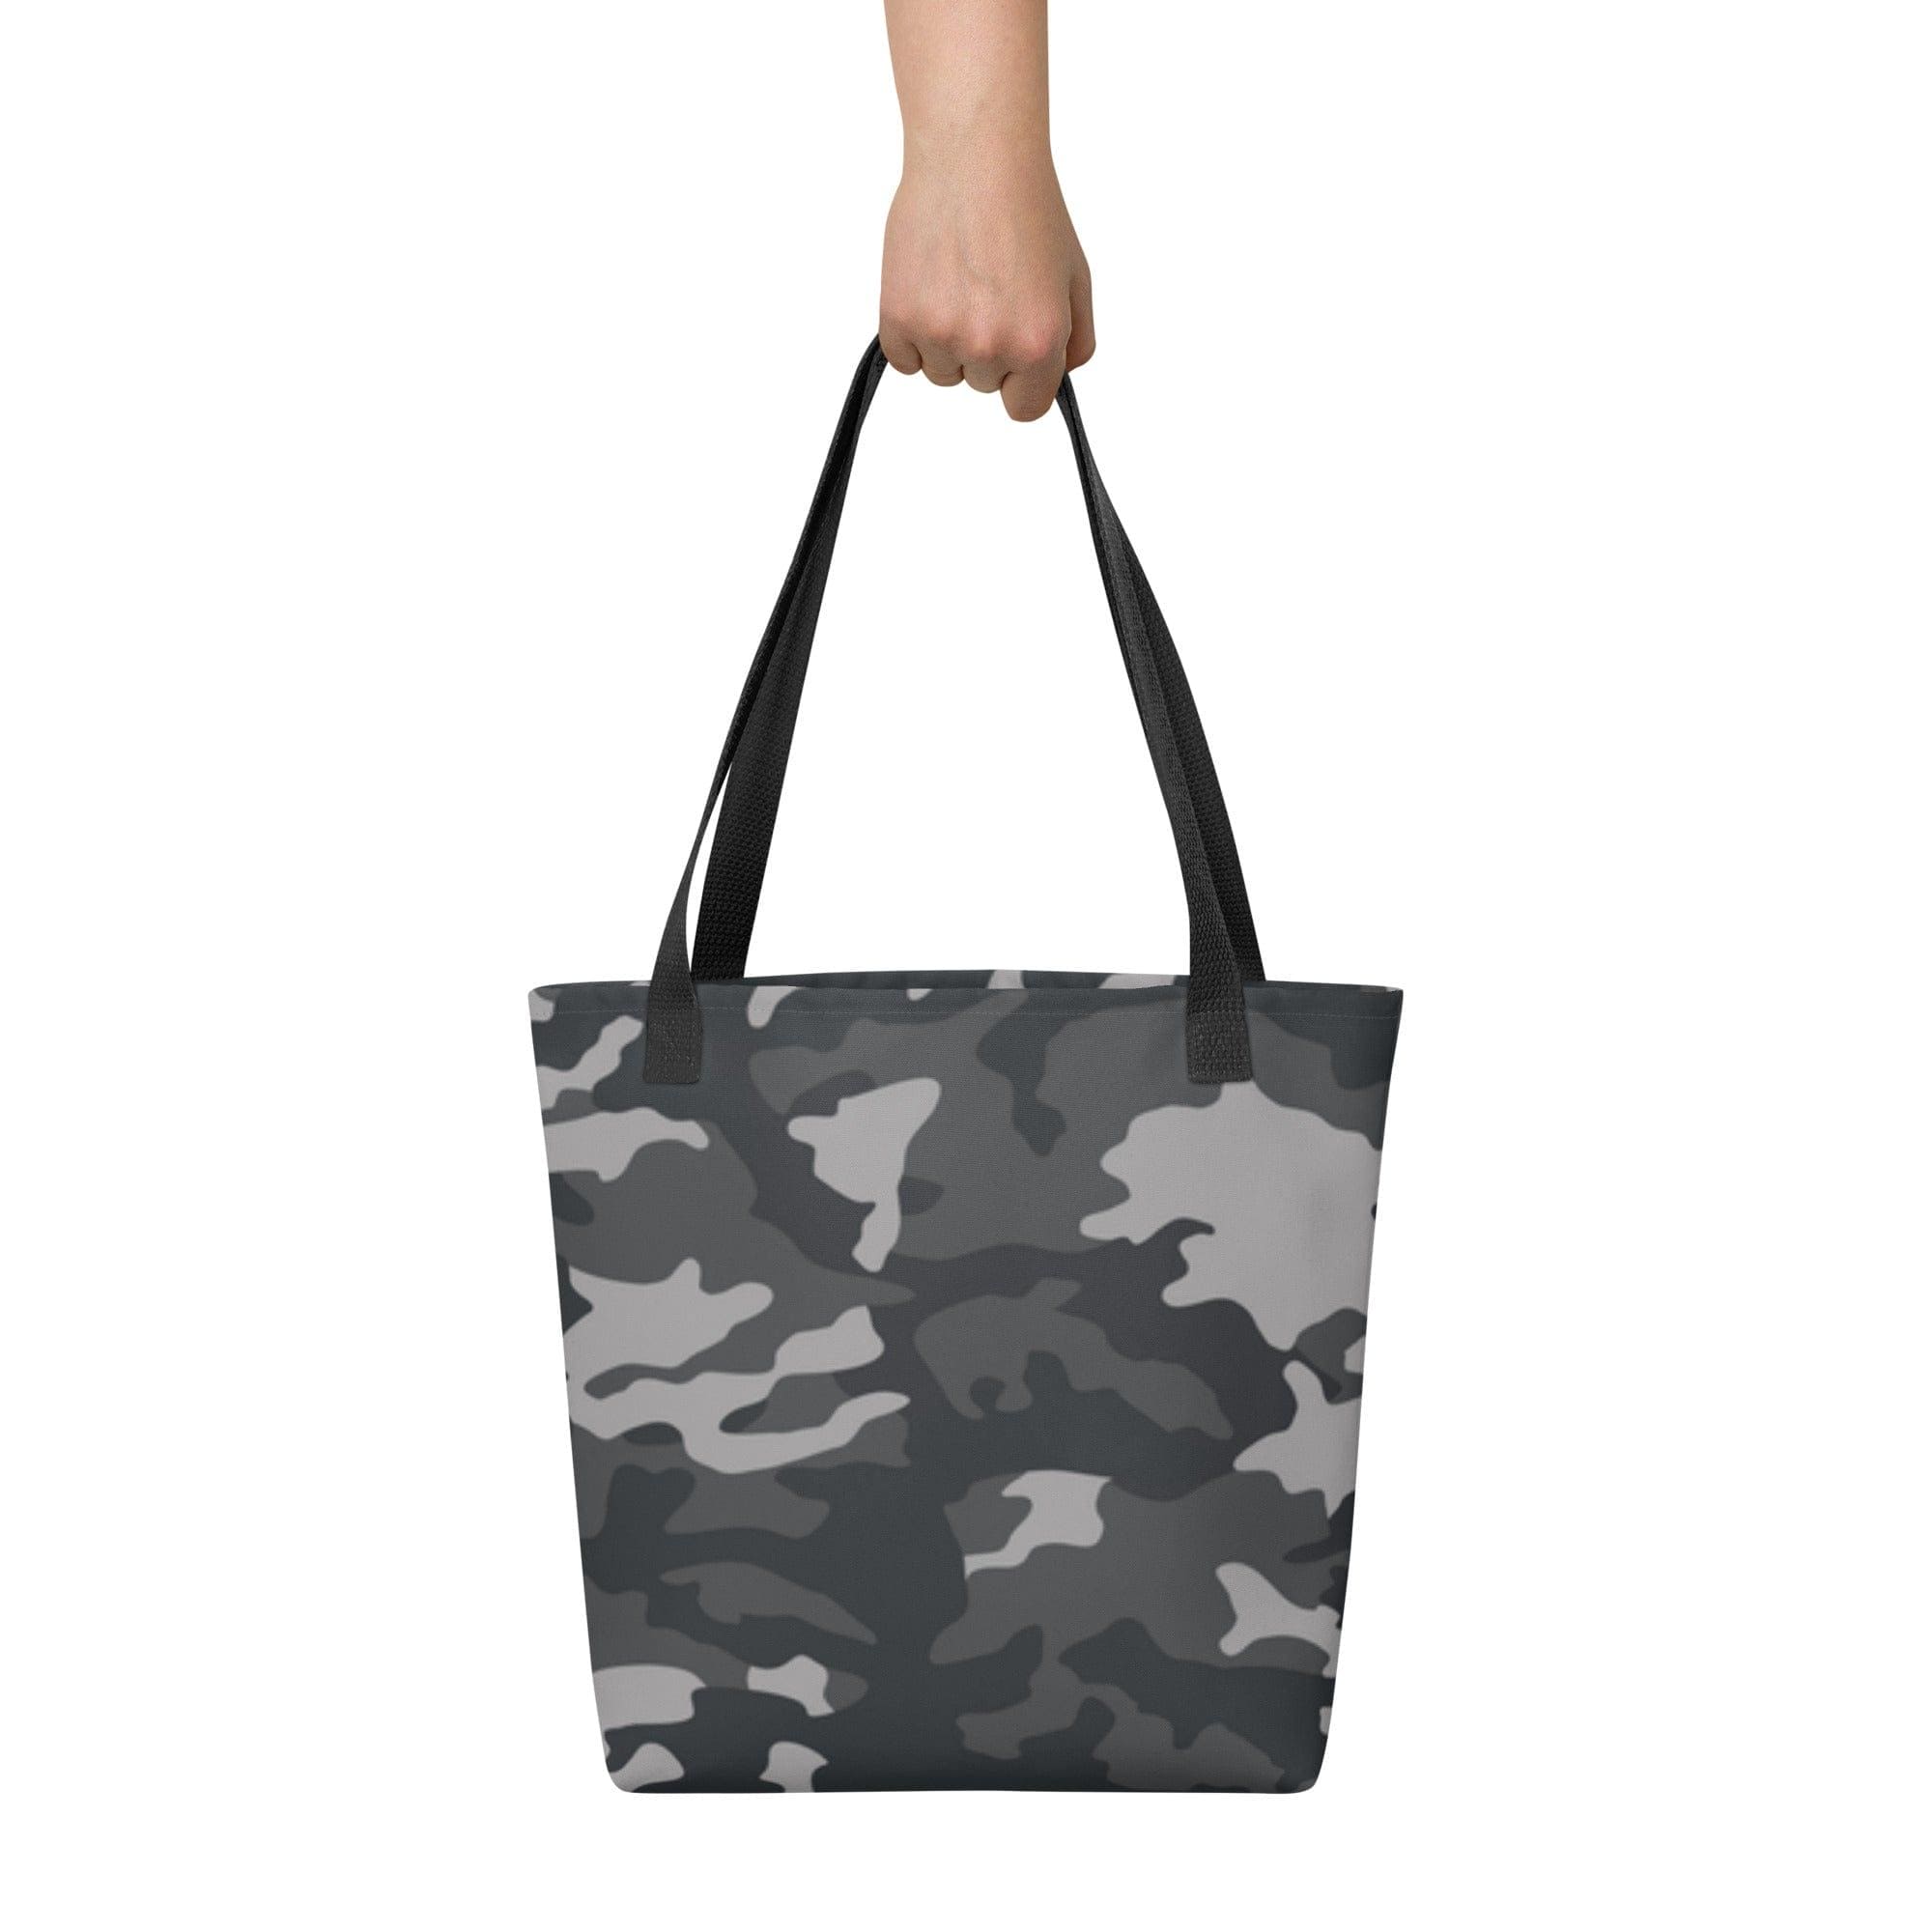 Stealth Style: Twin Dollar's Camo Black Design Tote Bag - TWIN DOLLAR